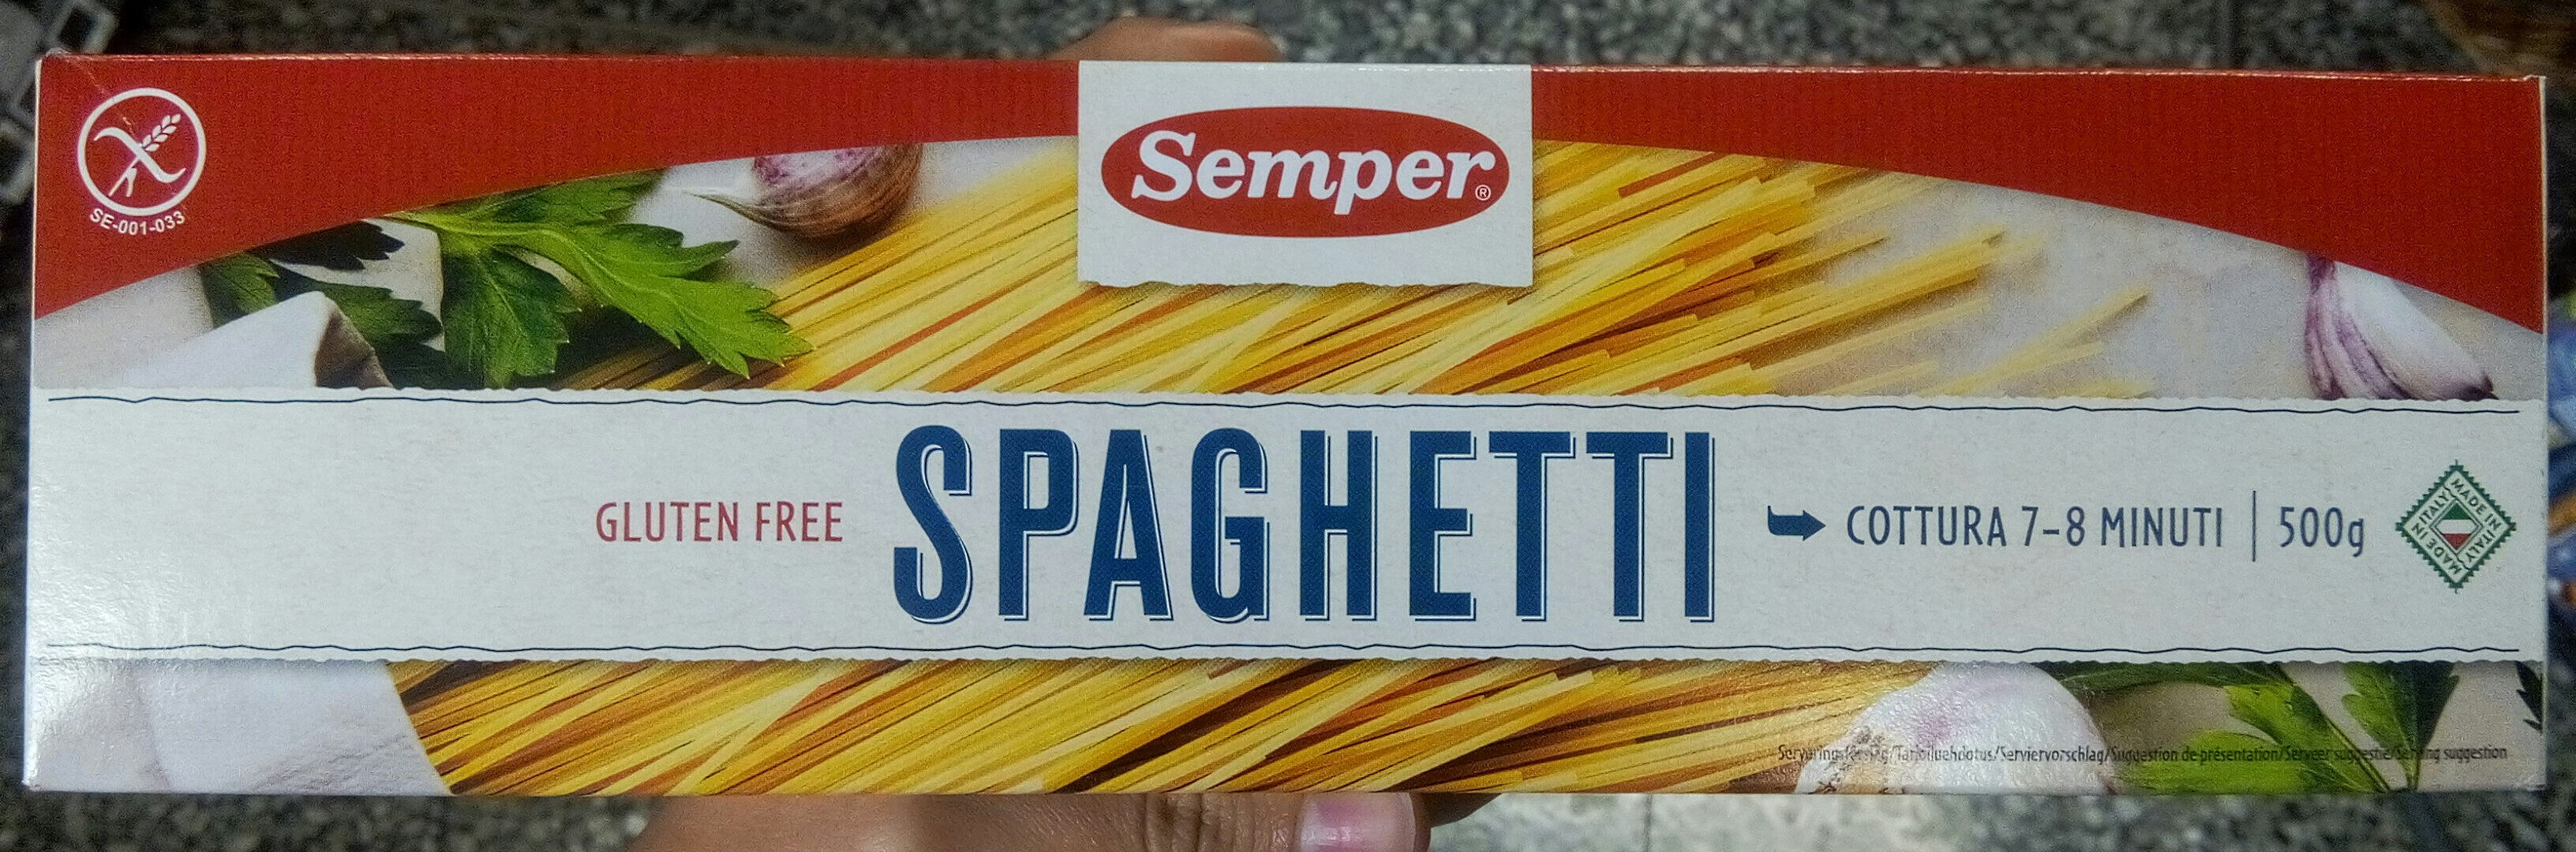 Spaghetti gluten free - Produkt - sv